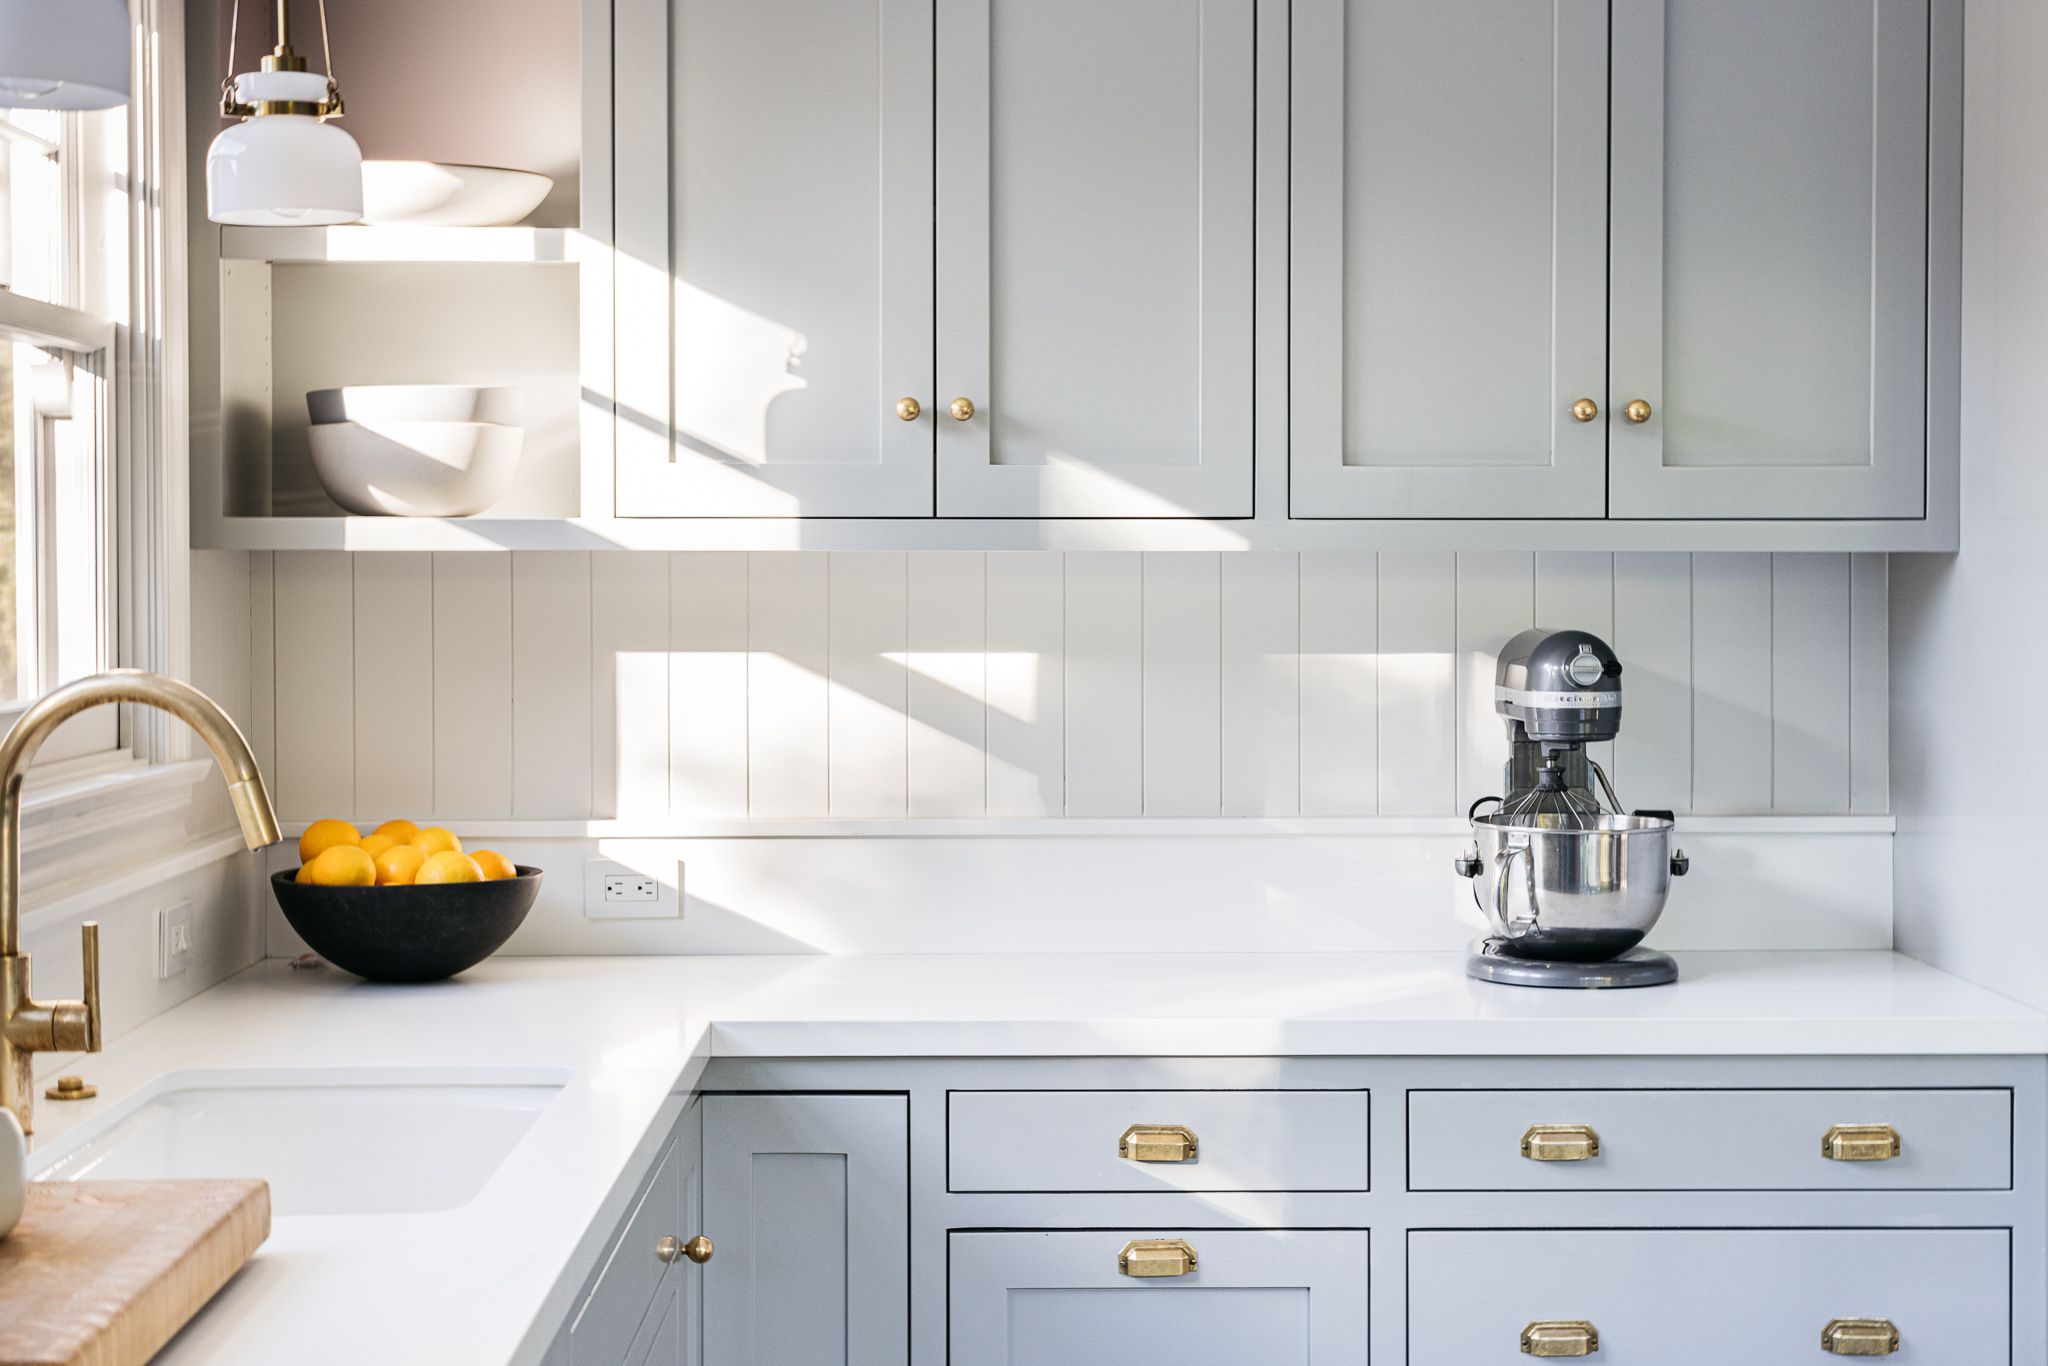 Enjoy your sparkling kitchen cabinets